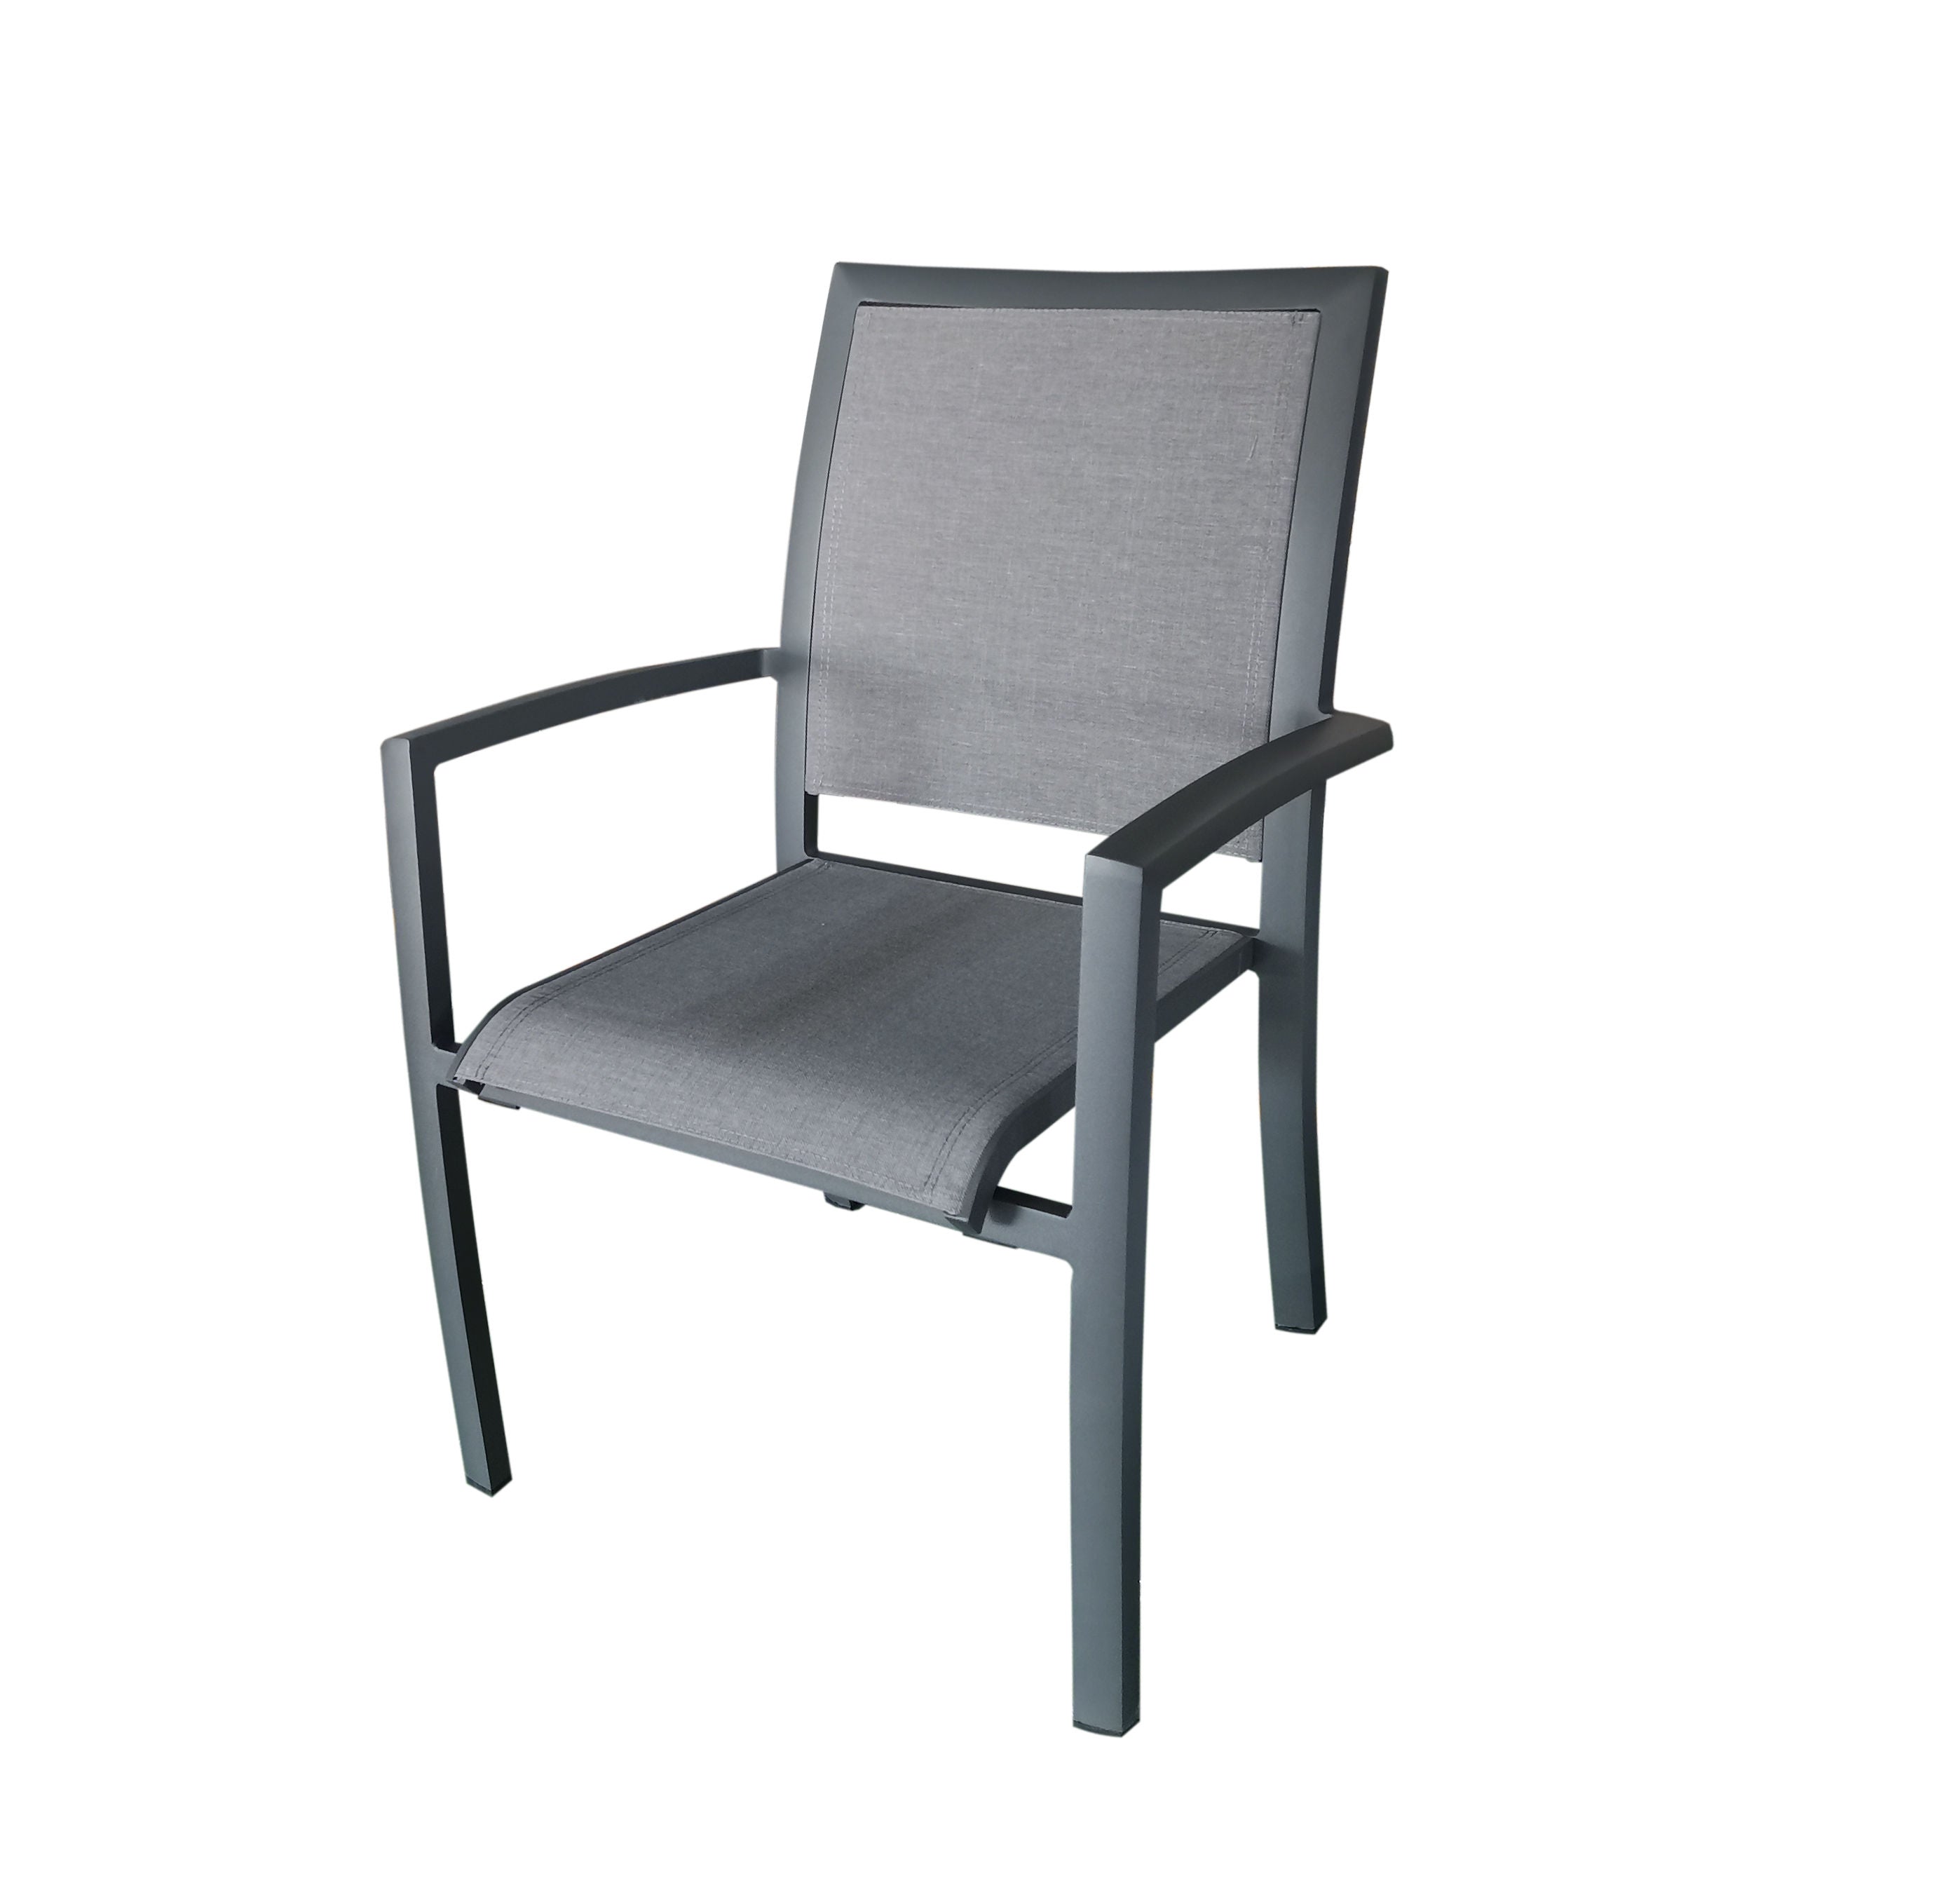 MOSS MOSS-T317GM - Akumal Collection, Charcoal matte aluminum stackable chair with grey mix textilene seat 24" x 31" x H 36"